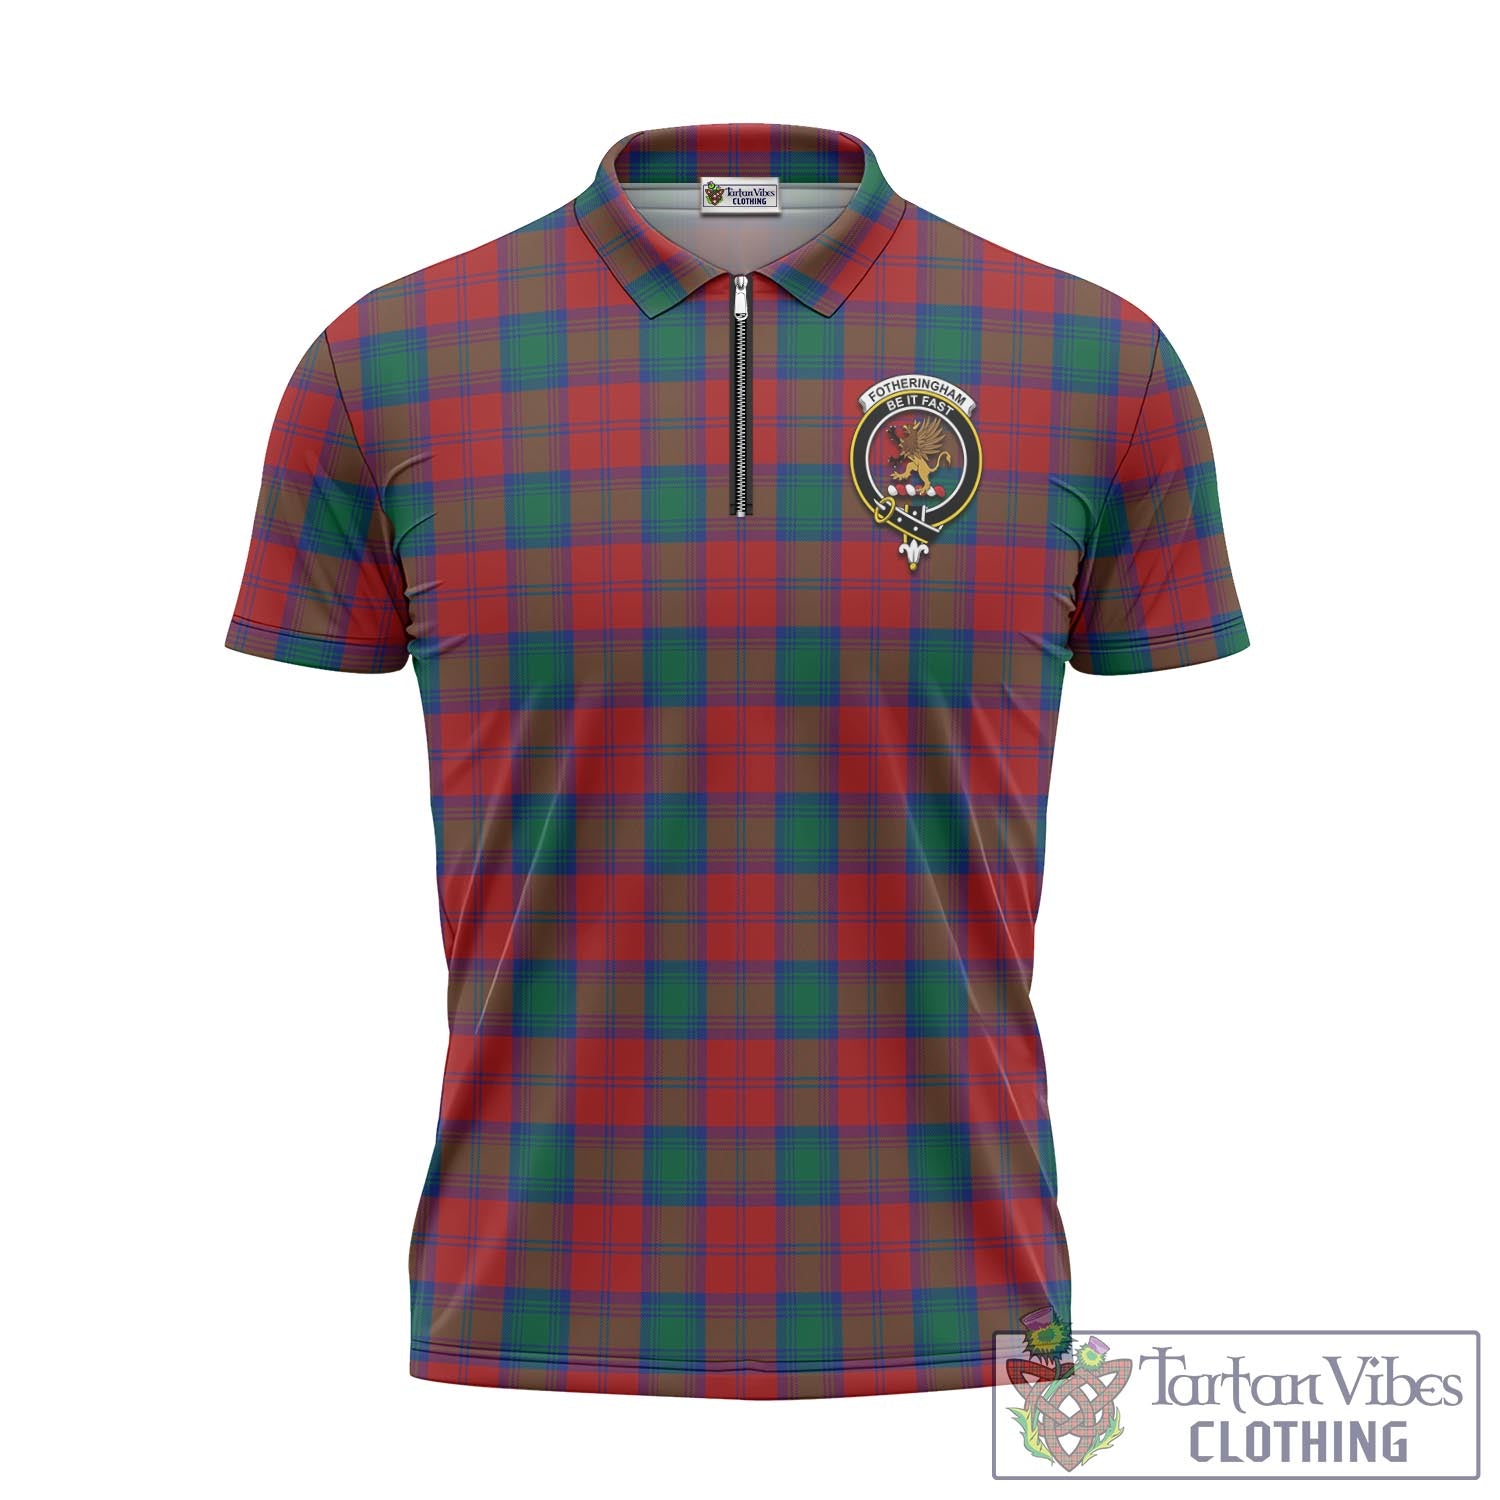 Tartan Vibes Clothing Fotheringham Modern Tartan Zipper Polo Shirt with Family Crest